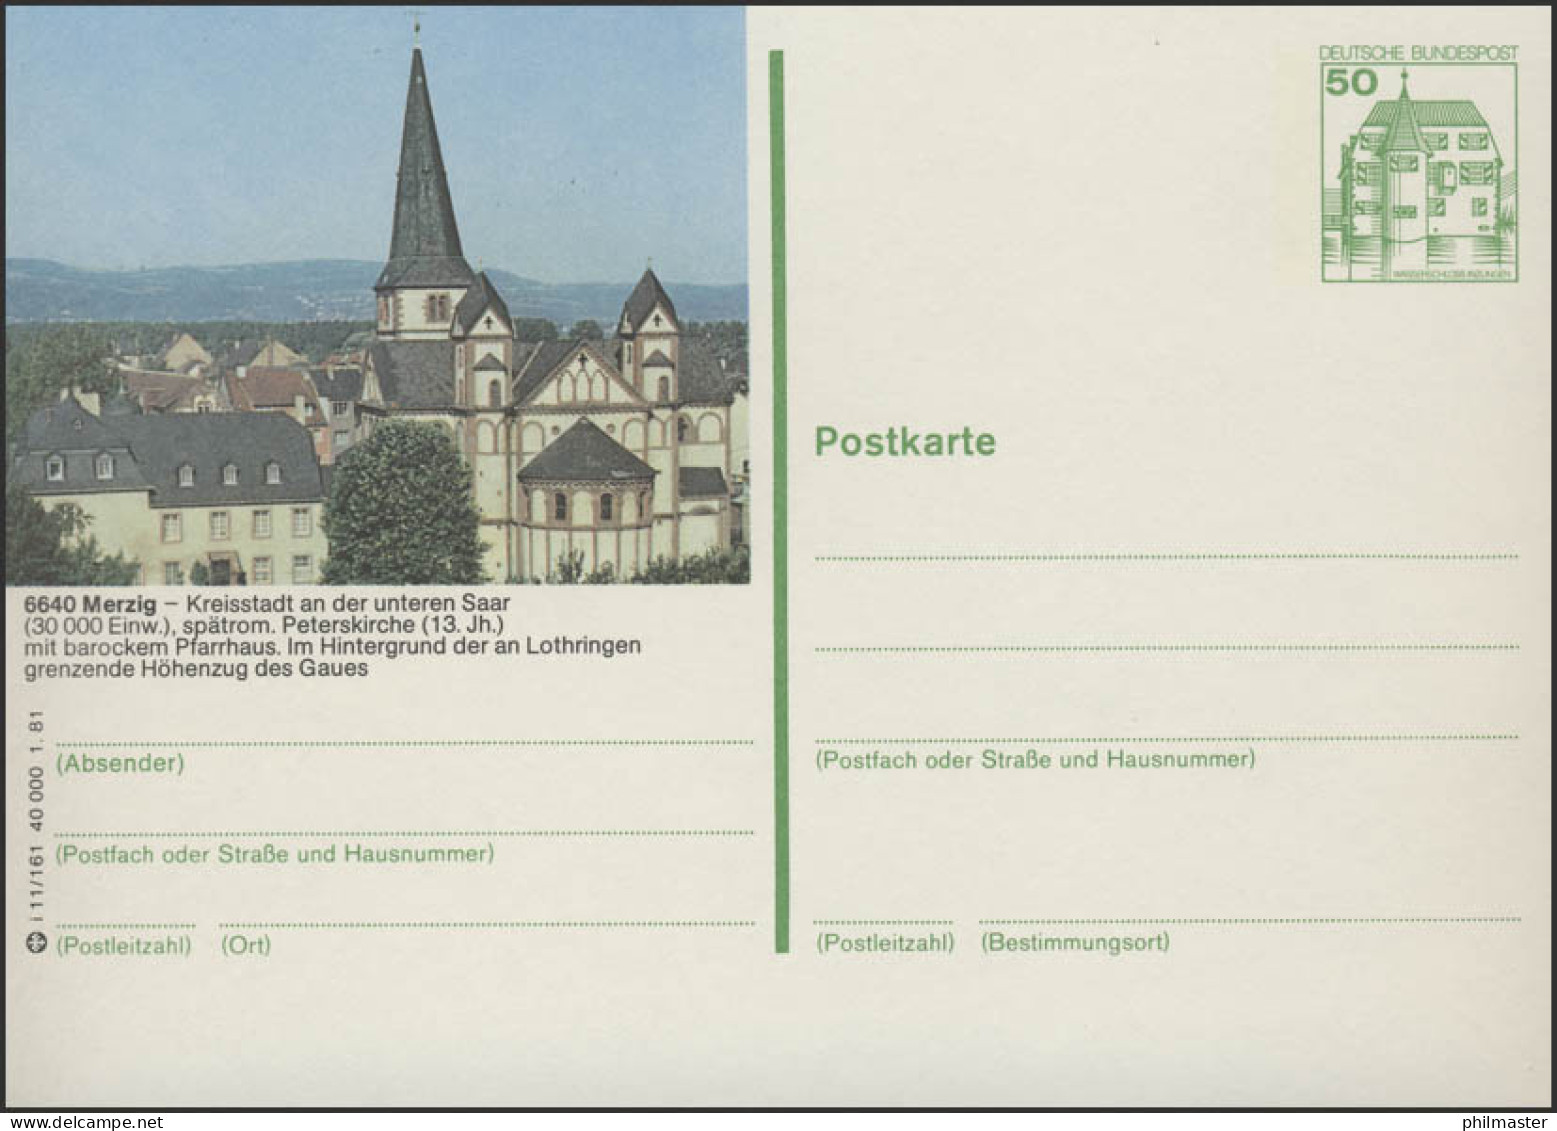 P134-i11/161 - 6640 Merzig, St.-Peter-Kirche ** - Bildpostkarten - Ungebraucht